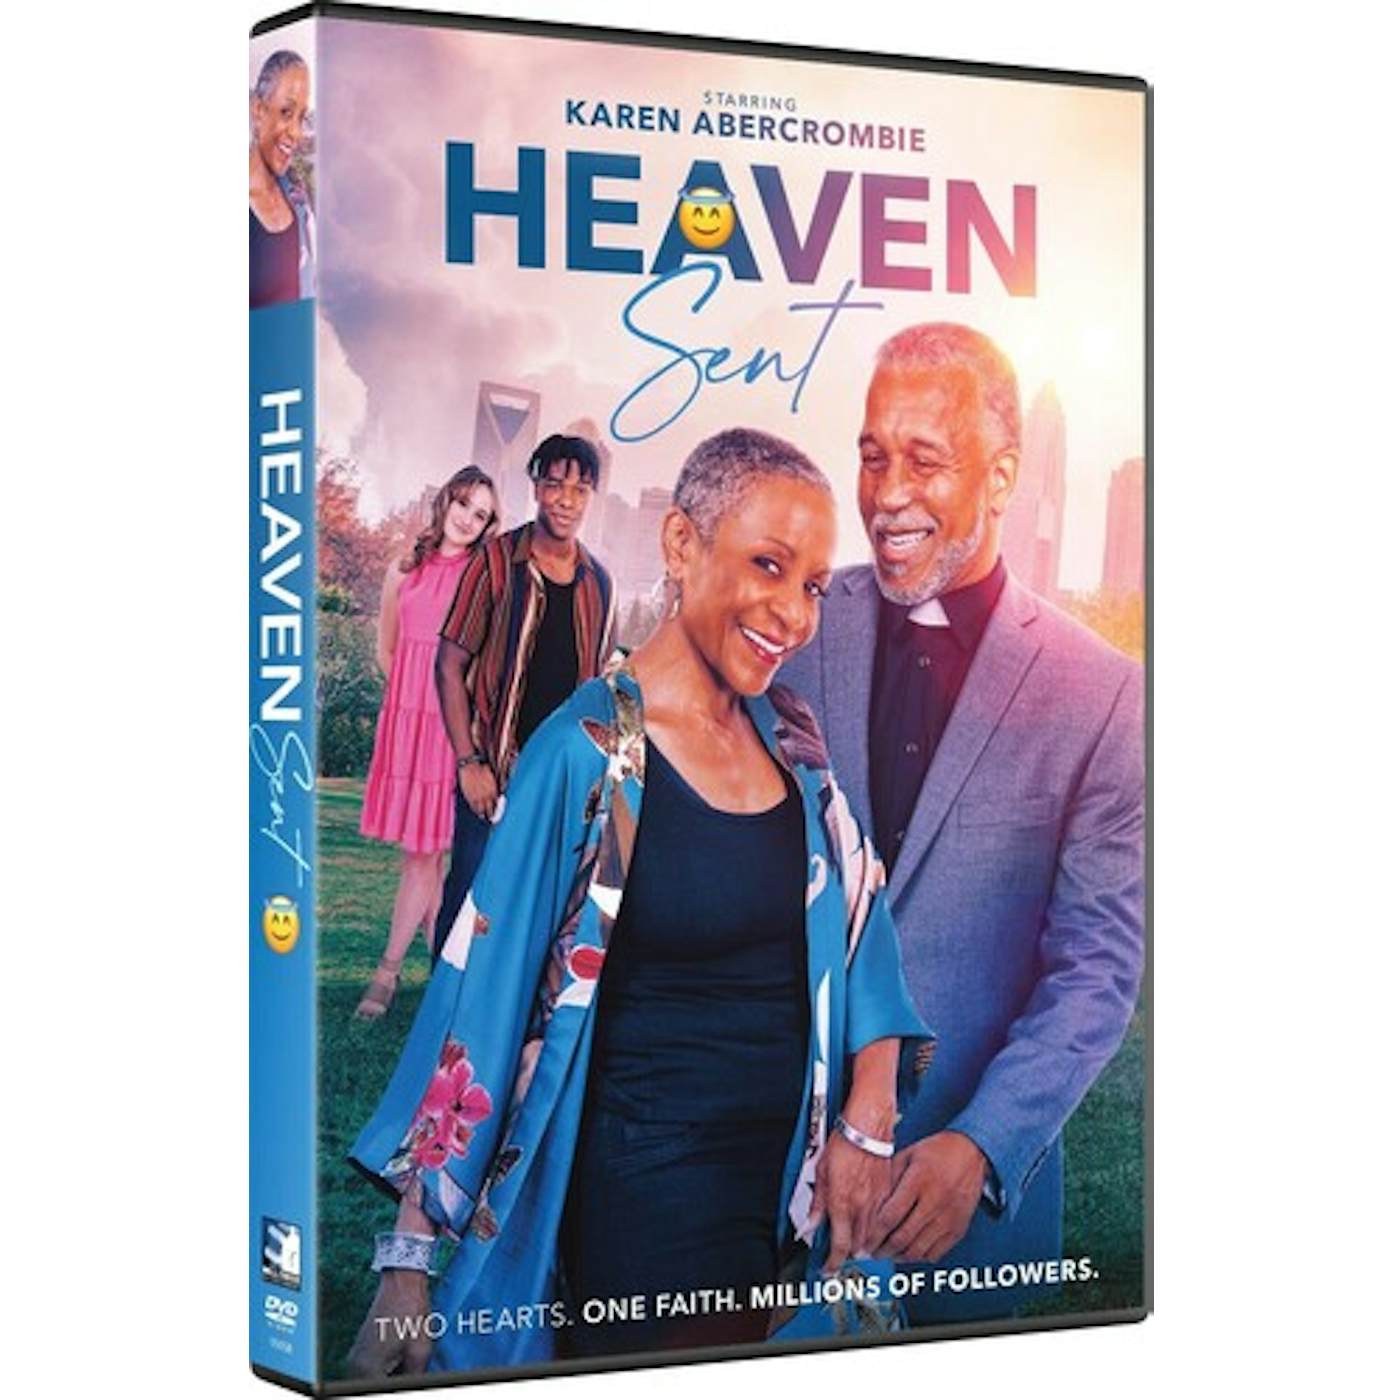 HEAVEN SENT DVD